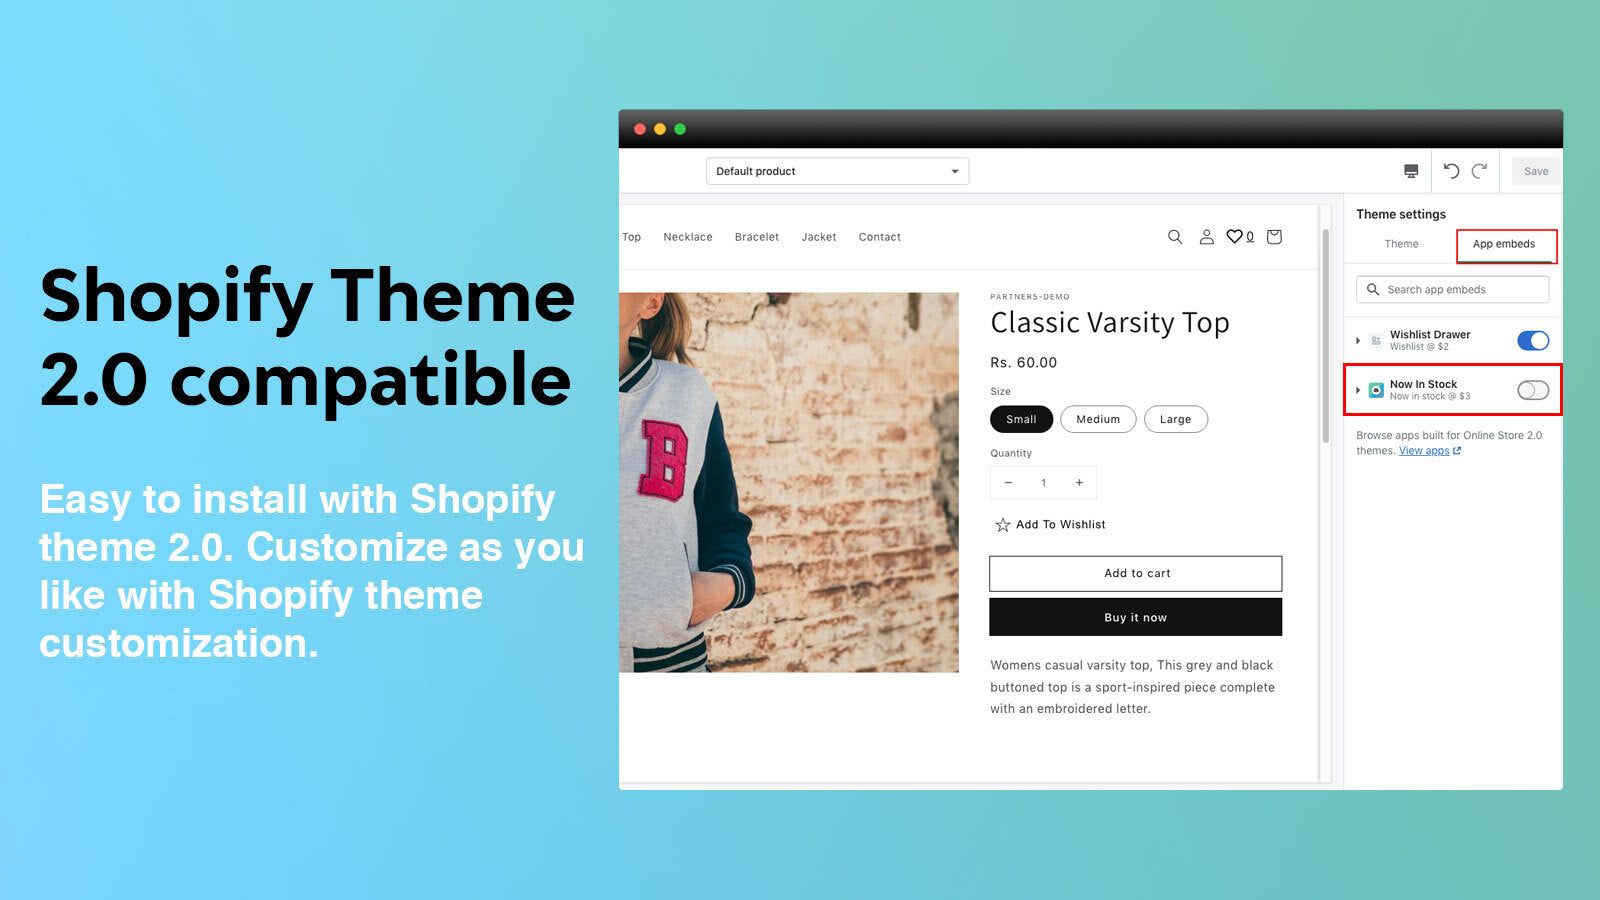 Shopify theme 2.0 compatible